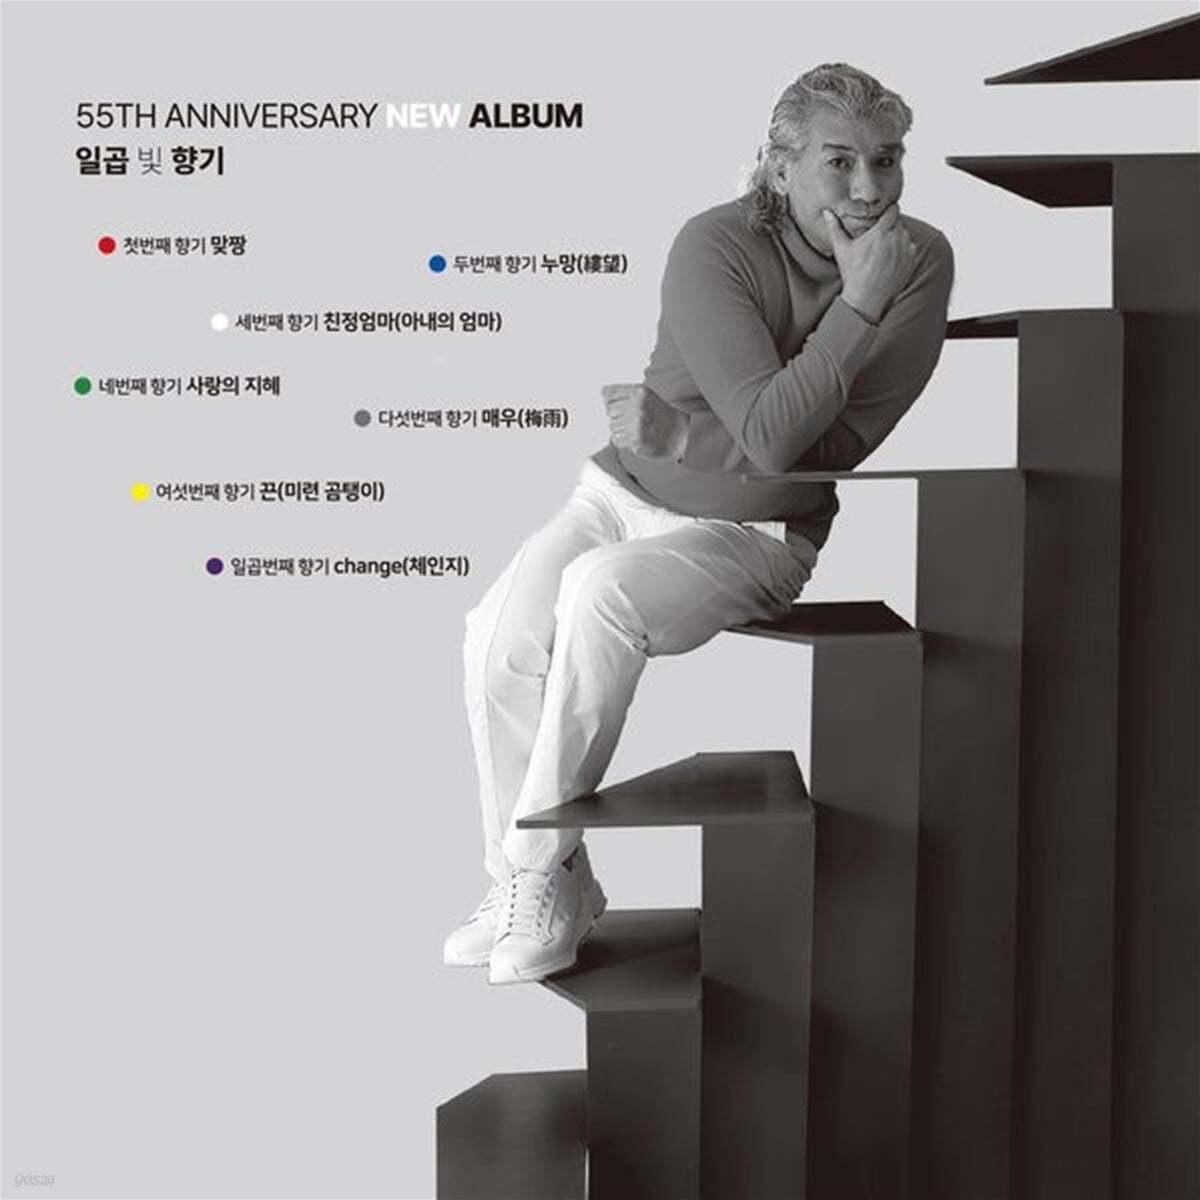 [USB앨범] 나훈아 - 일곱 빛 향기 : 55th Anniversary New Album (USB)